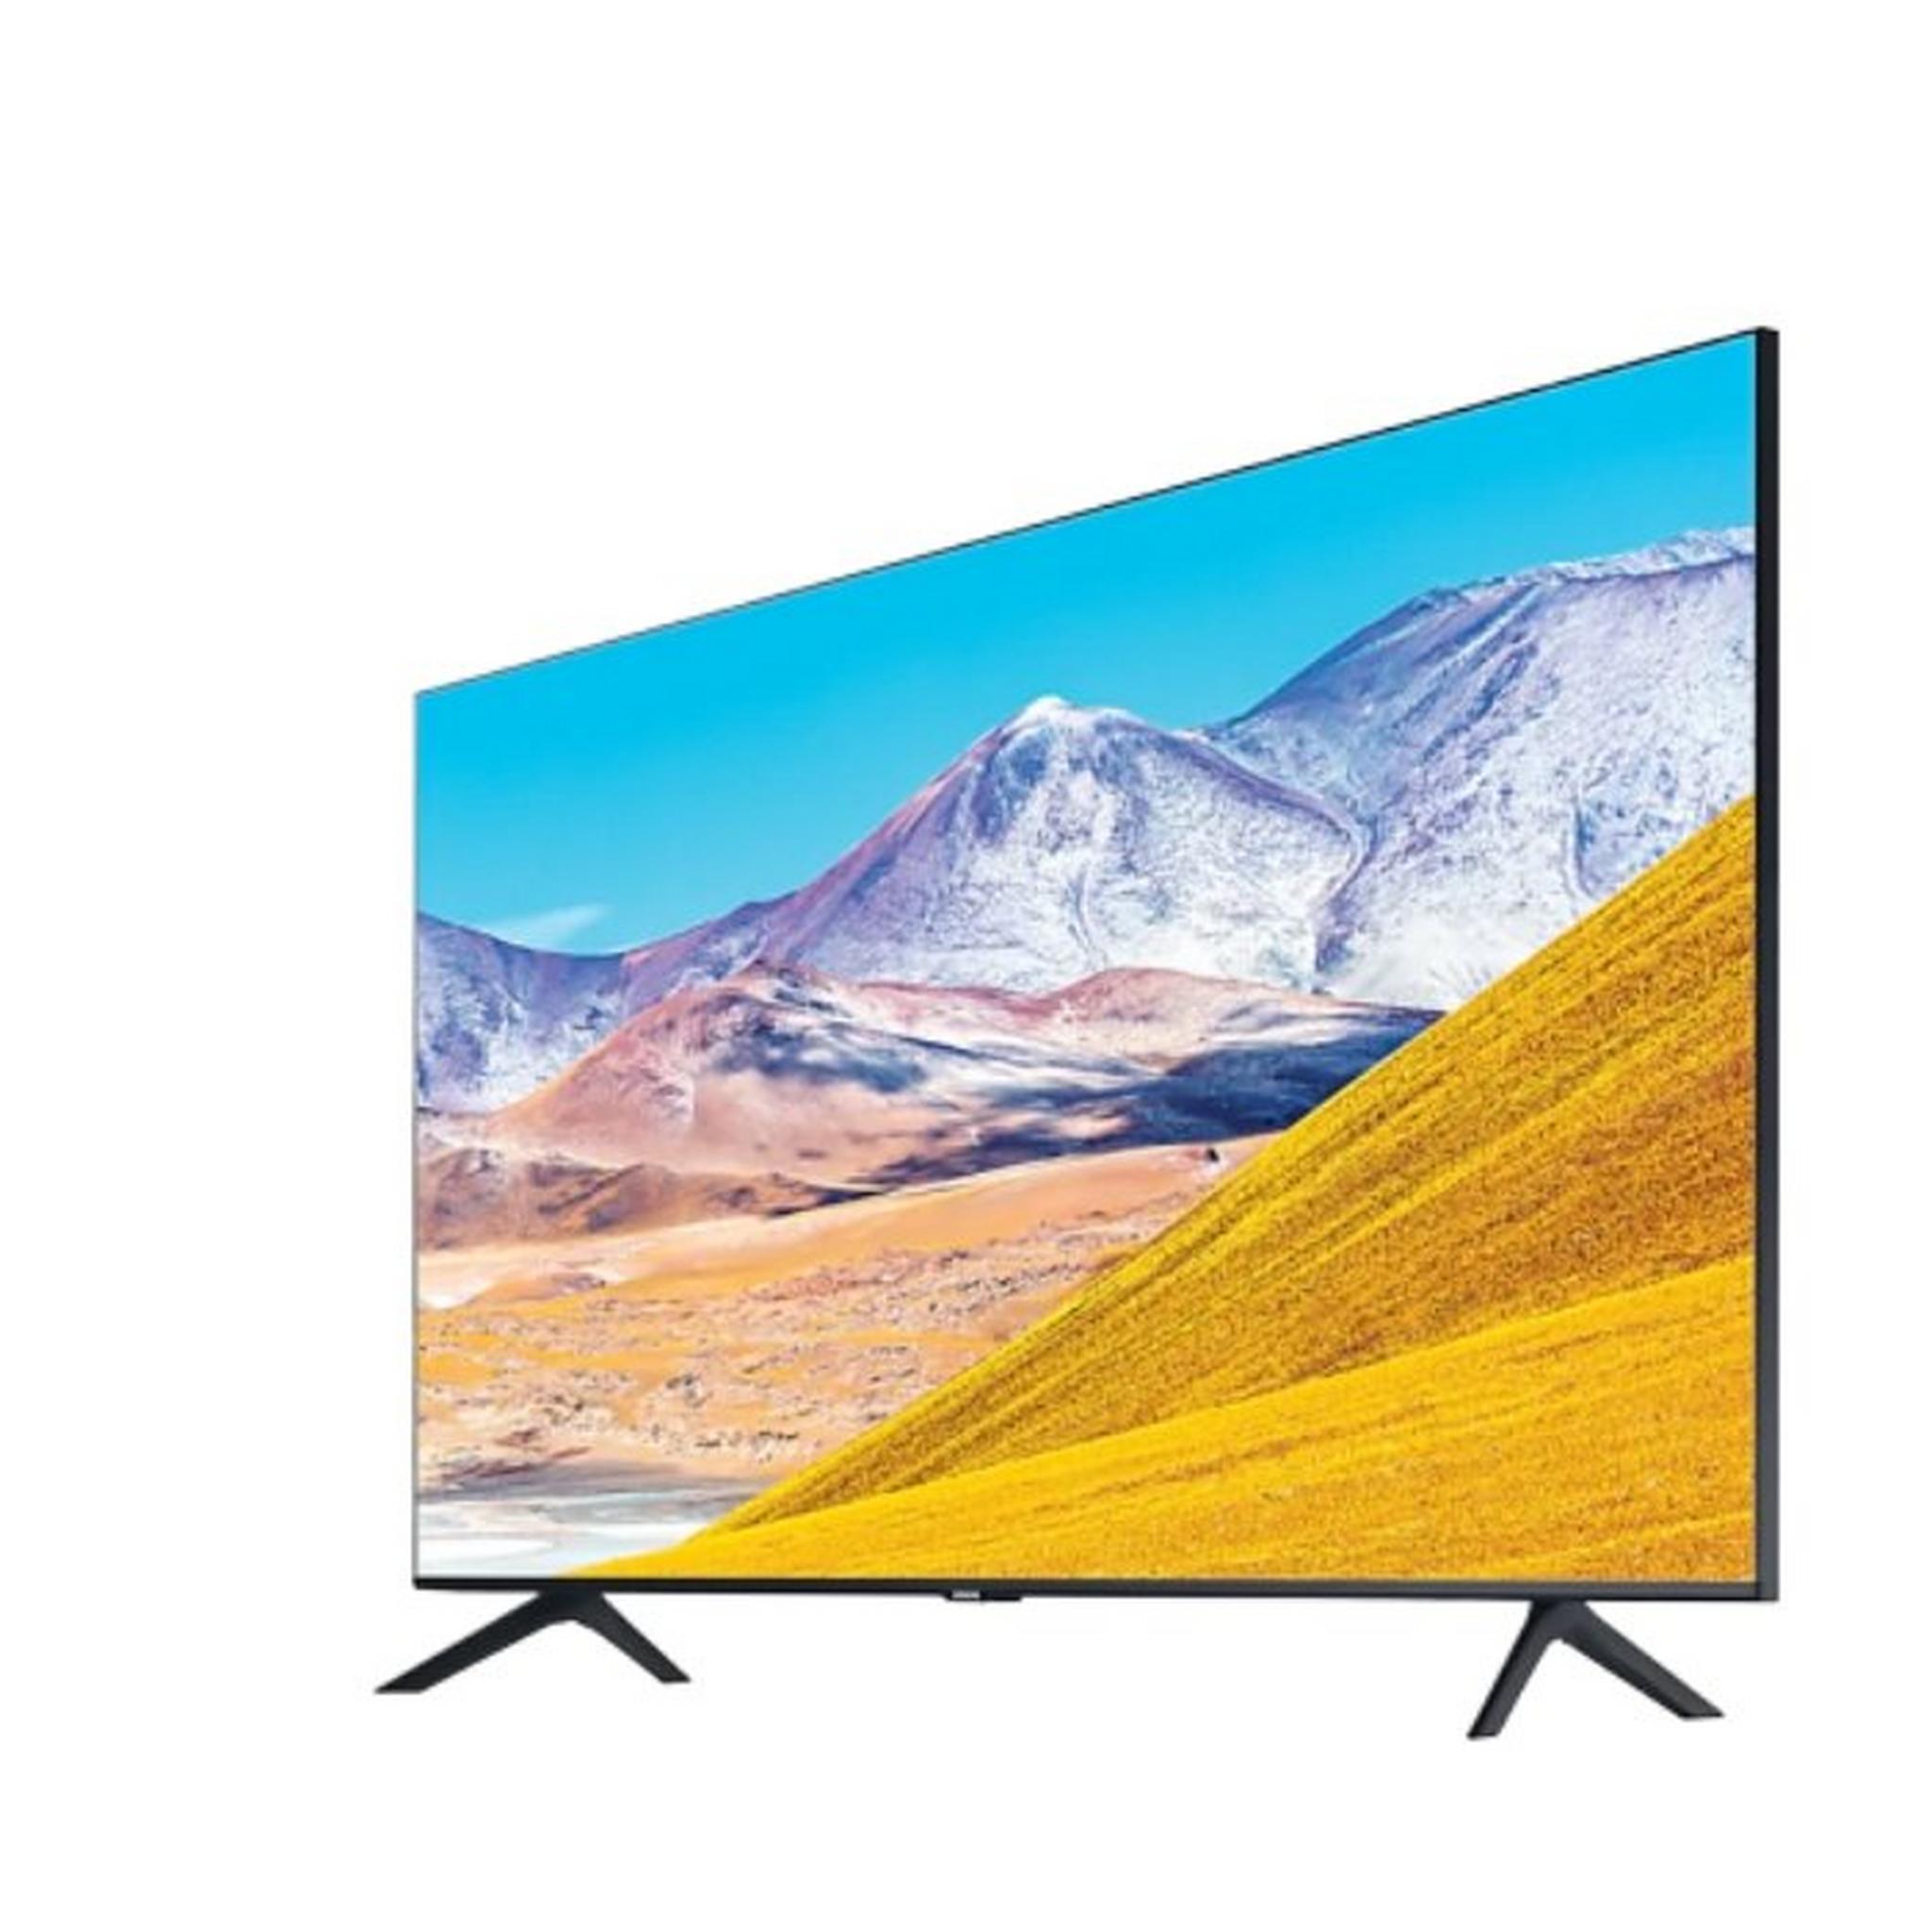 Samsung TV 75" UHD 4k Smart LED (UA75TU8000)